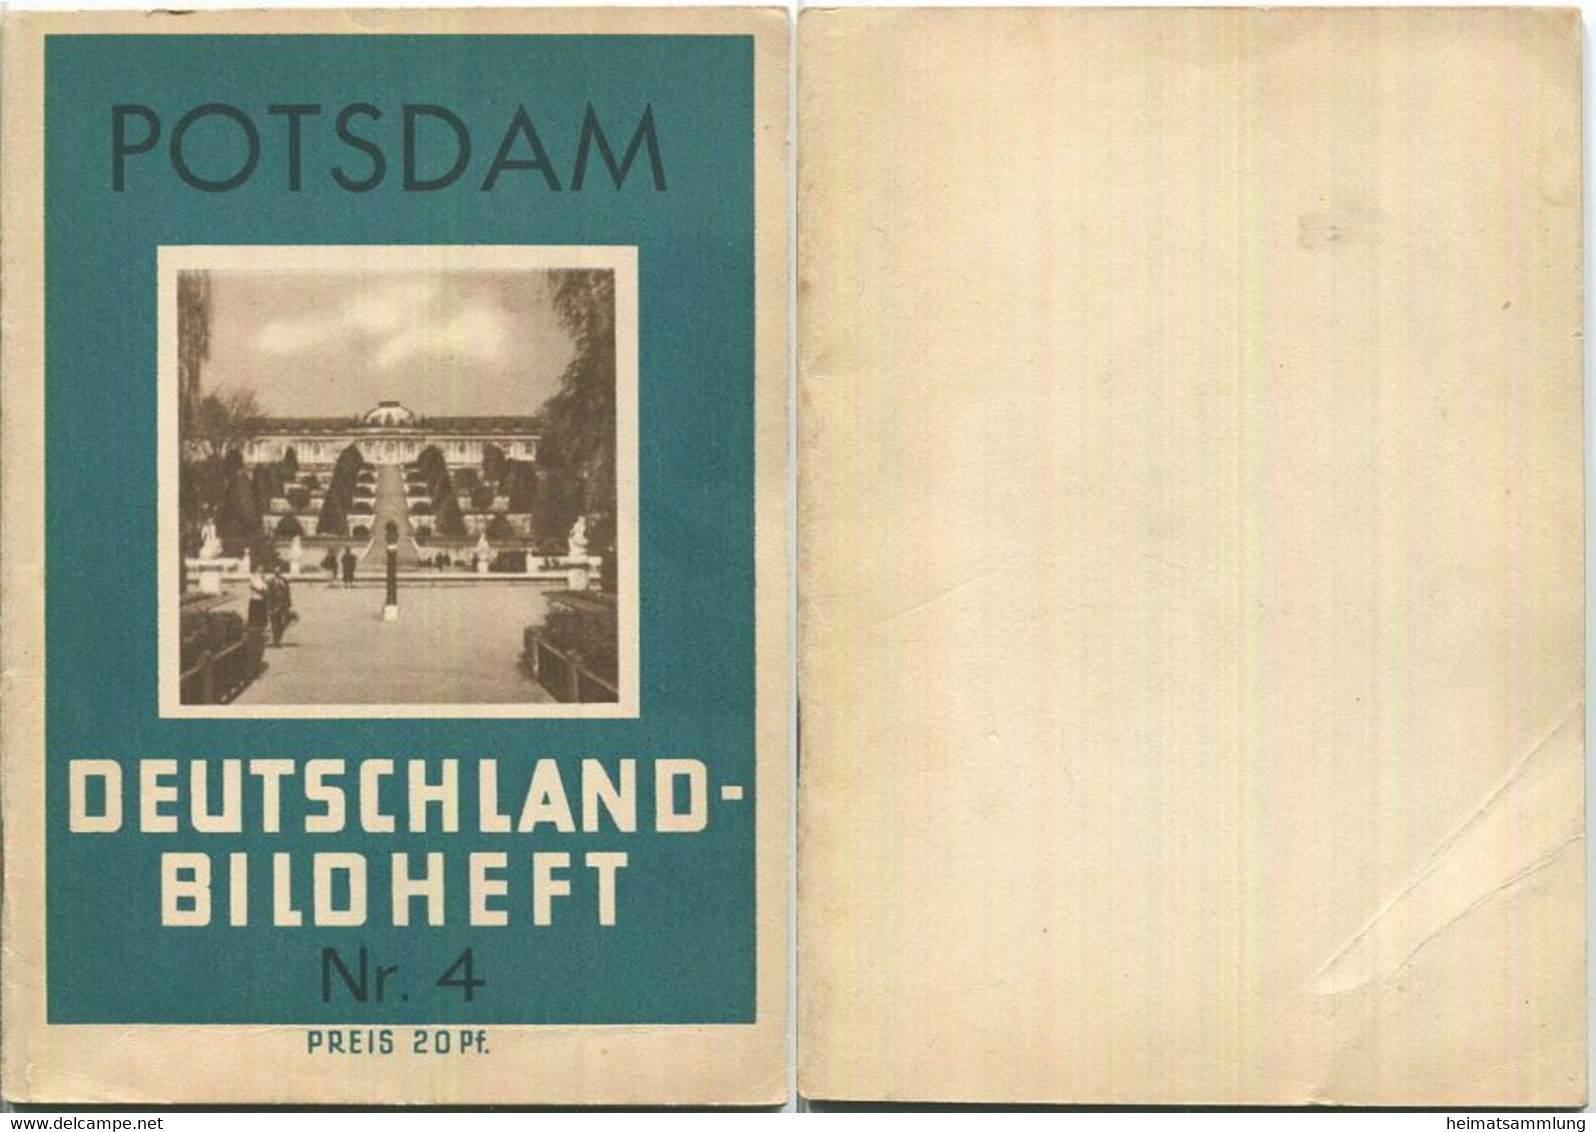 Nr. 4 Deutschland-Bildheft - Potsdam - Berlin & Potsdam